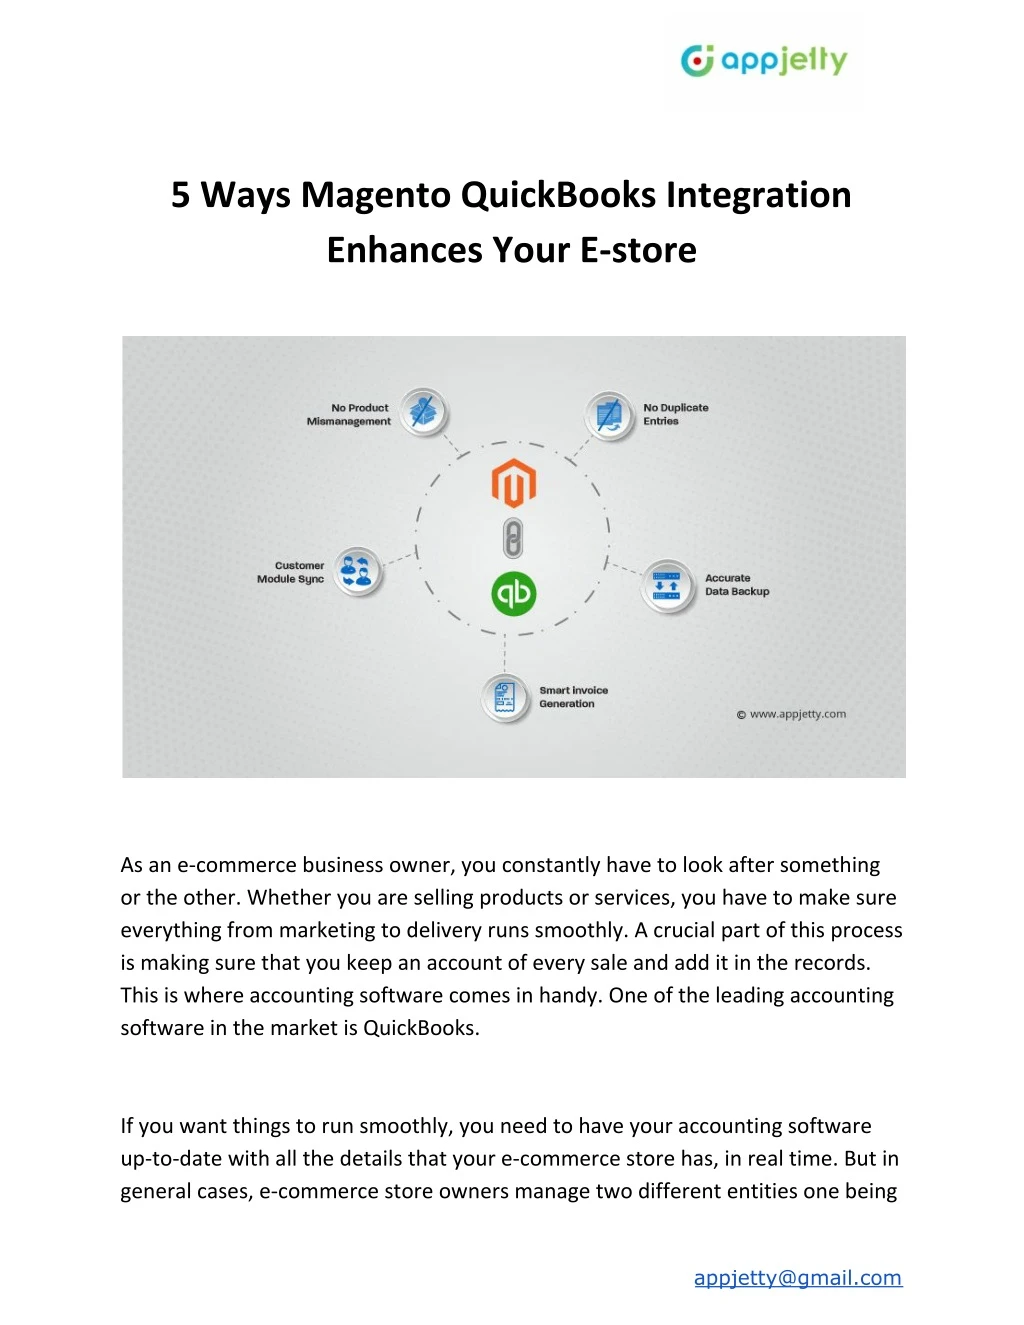 5 ways magento quickbooks integration enhances